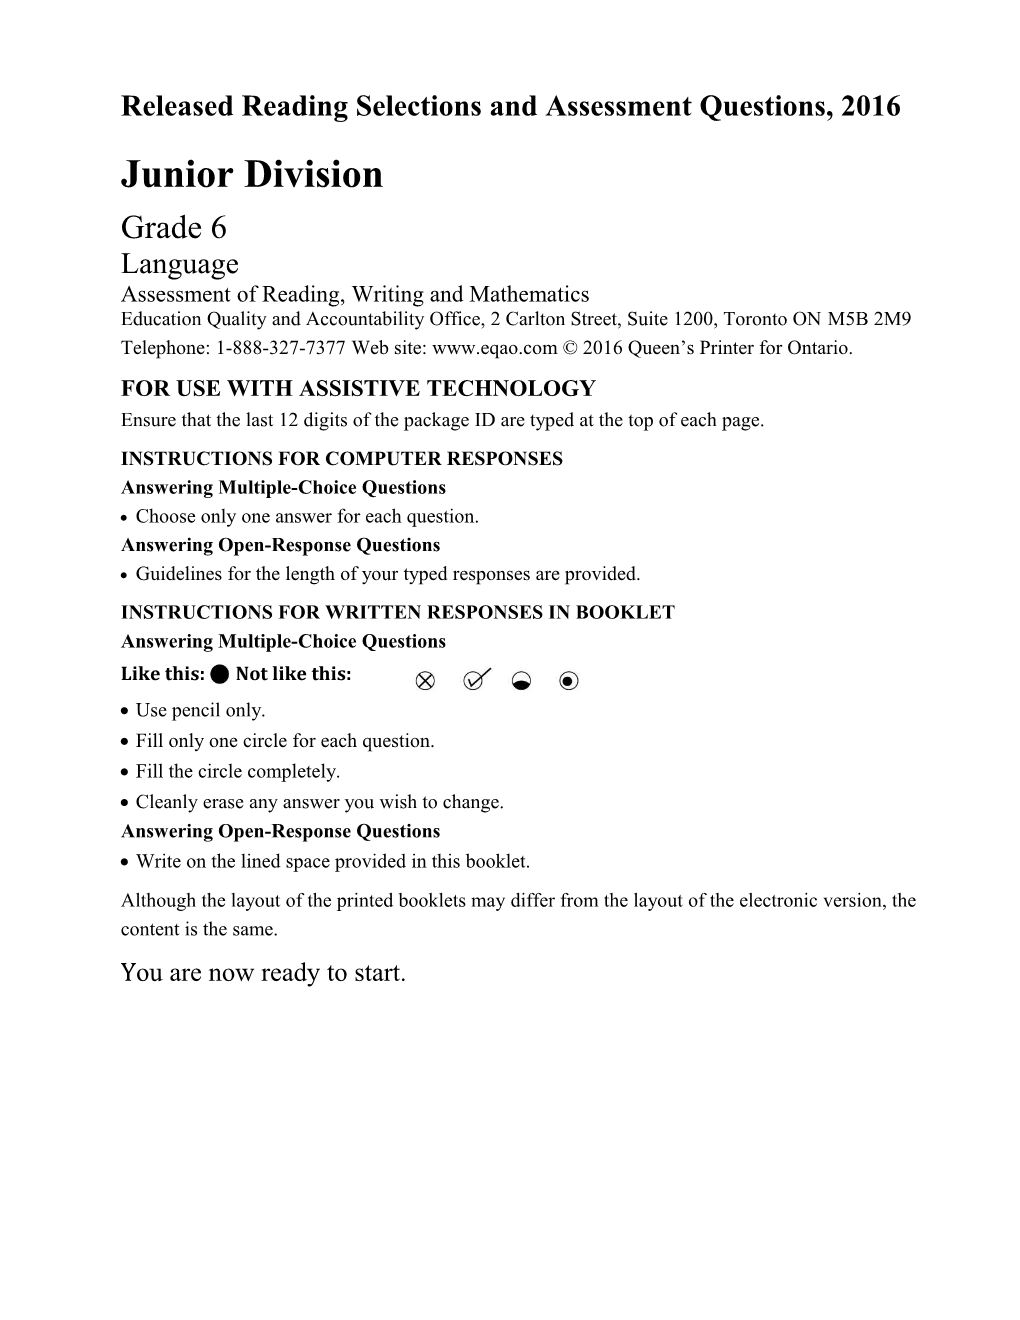 Grade 6, Junior Division Sample Assessment Booklet: Word Optimized for Premier, 2016